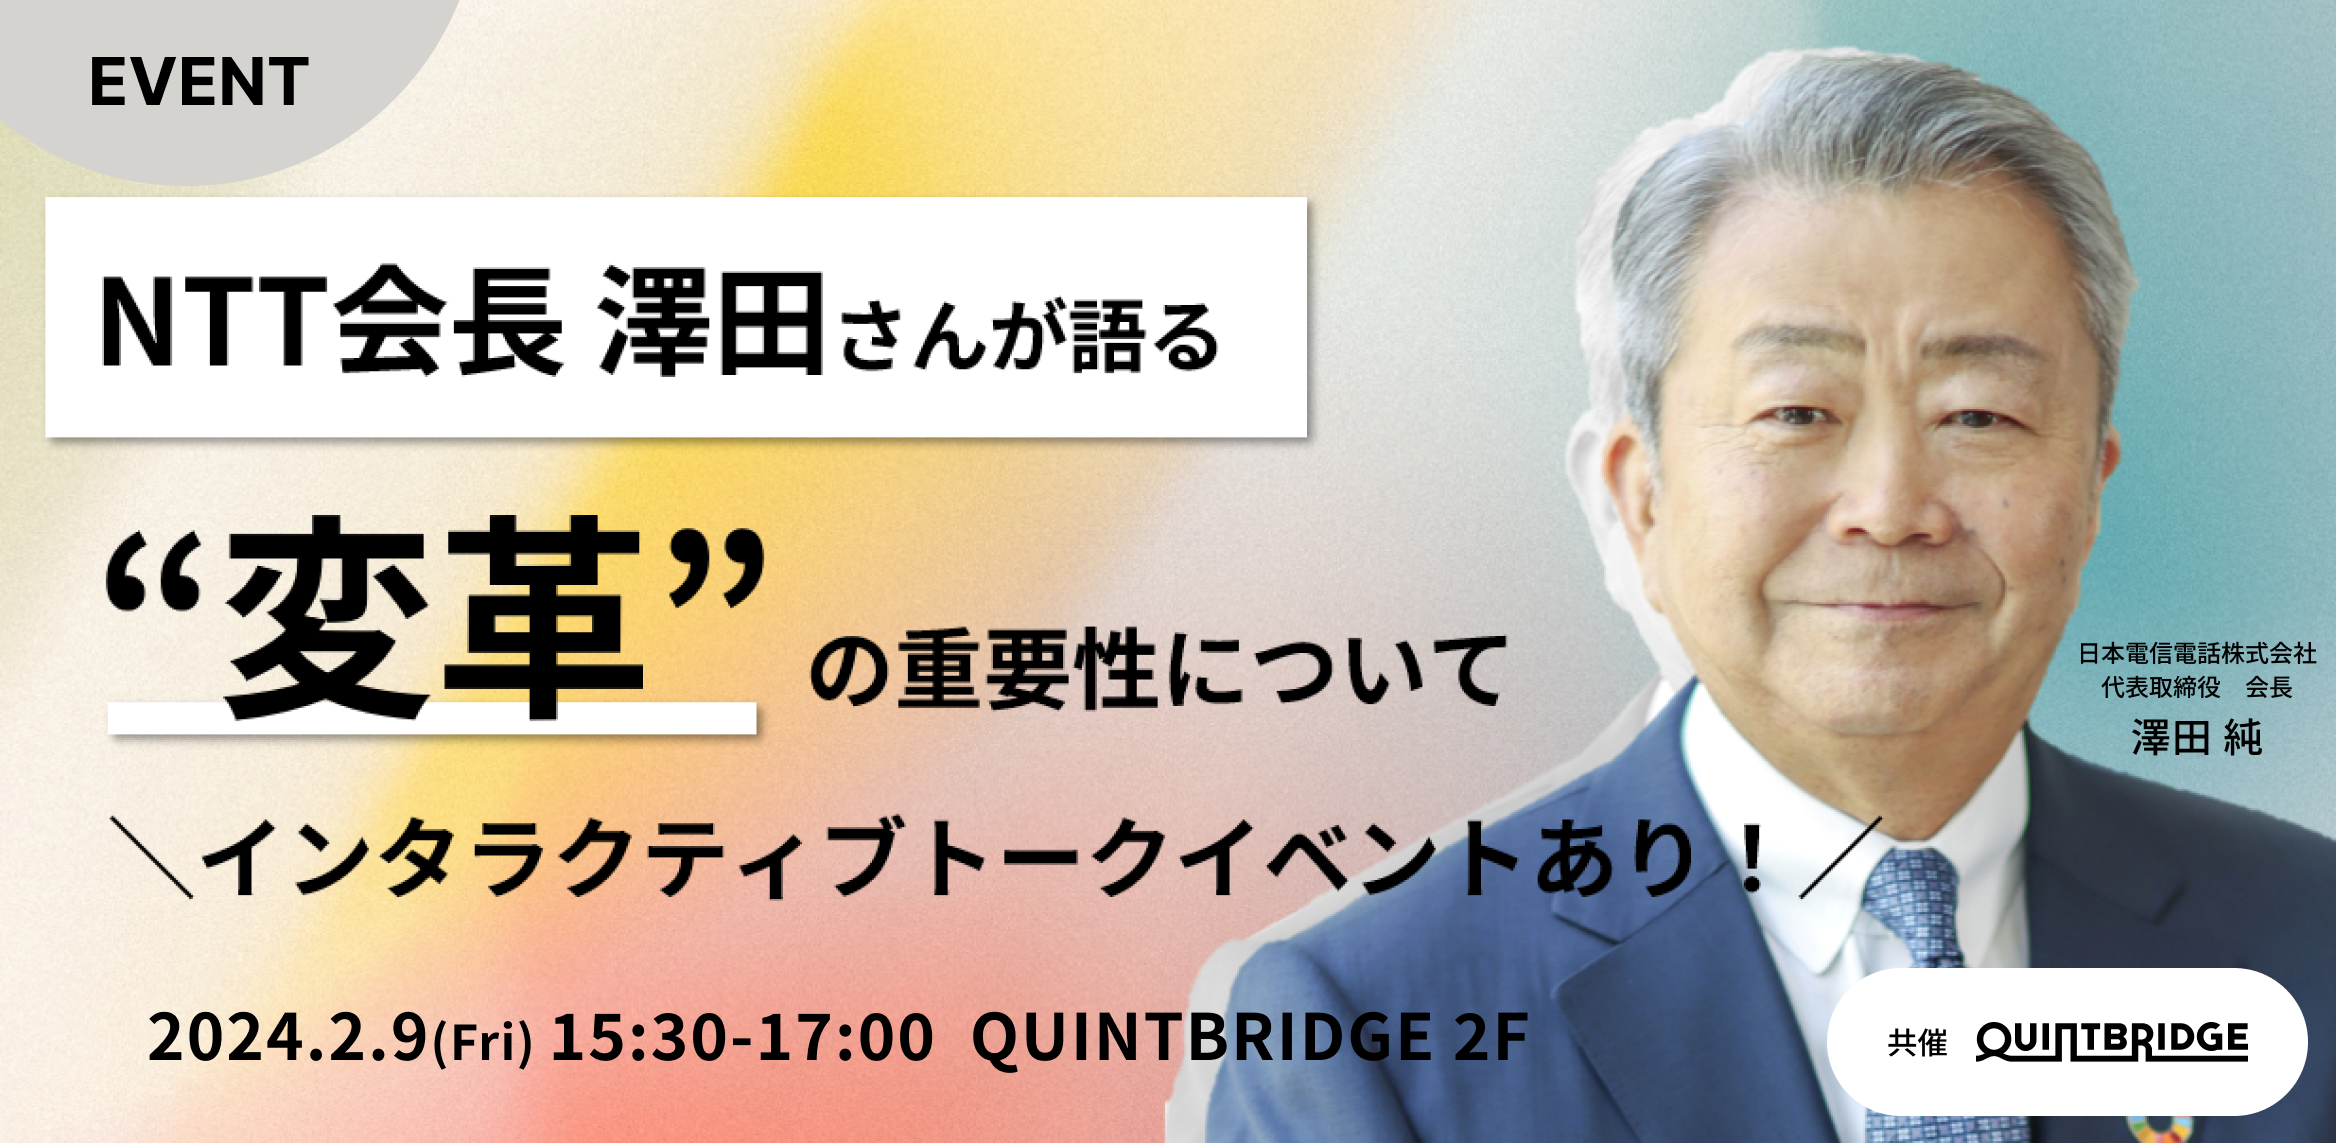 NTT会長澤田さんが語る”変革”の重要性について